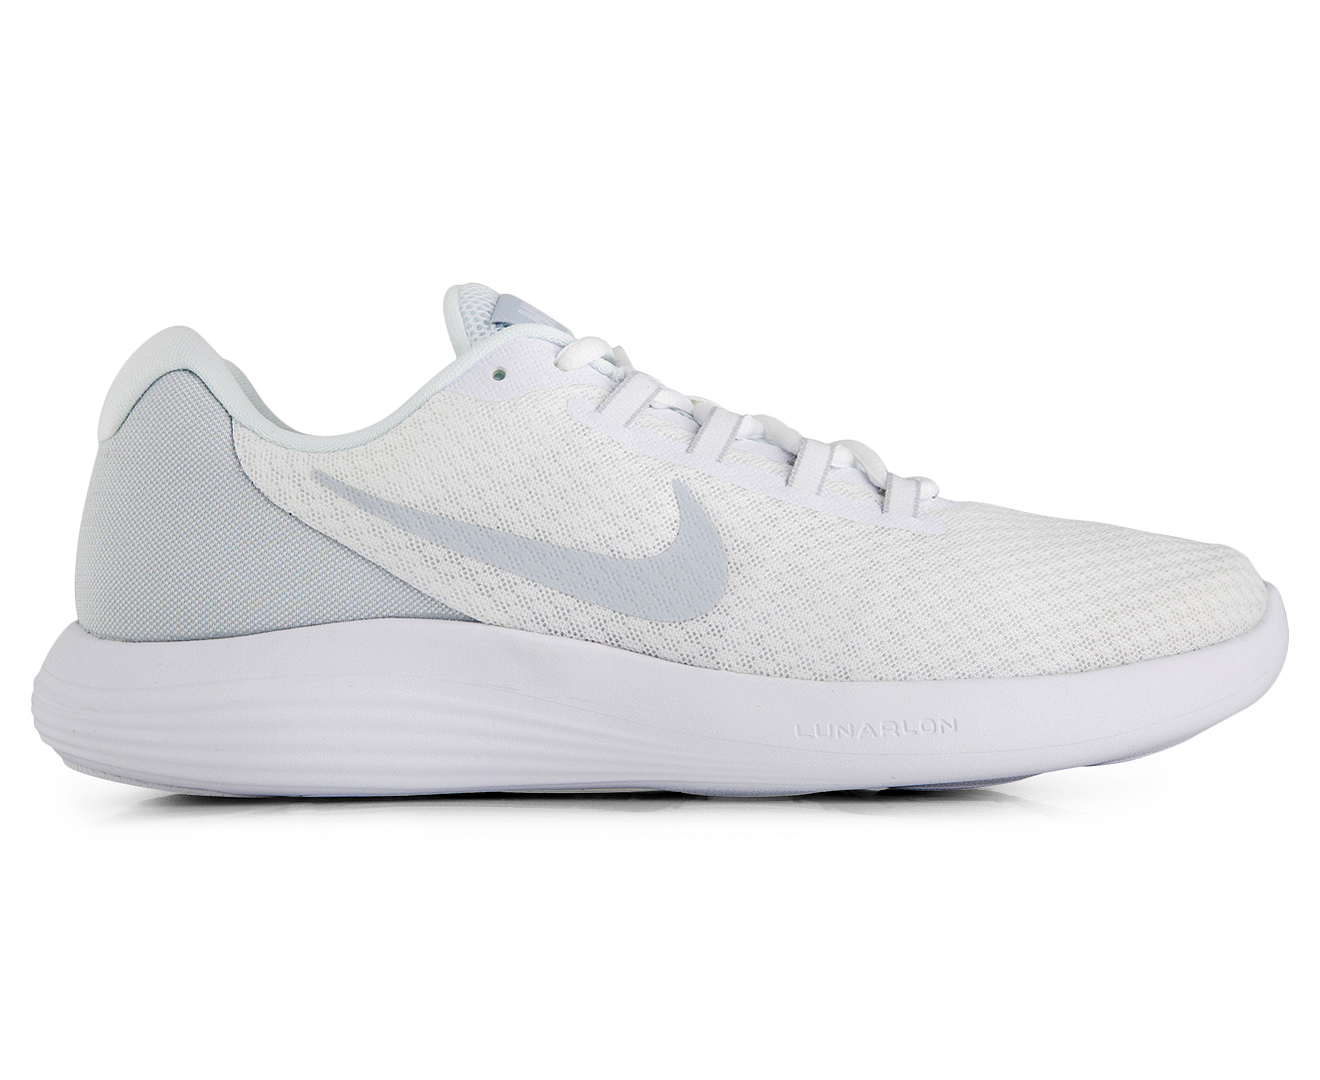 Nike Men's LunarConverge Shoe - White | Catch.co.nz